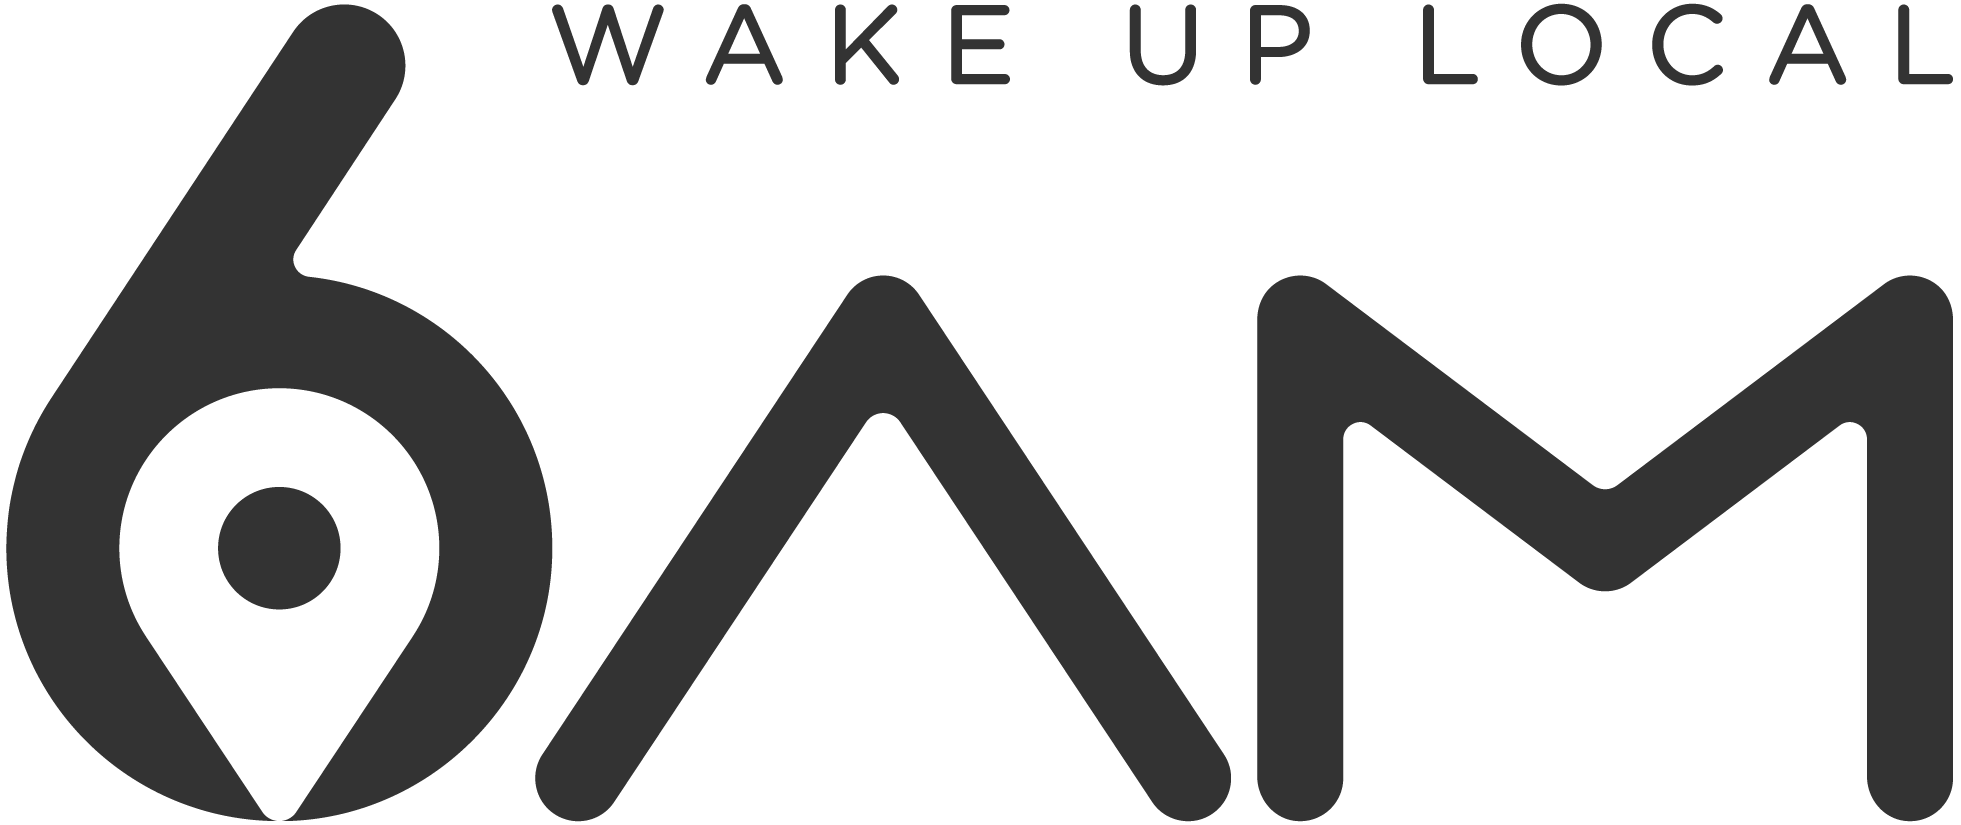 6AM City, LLC logo